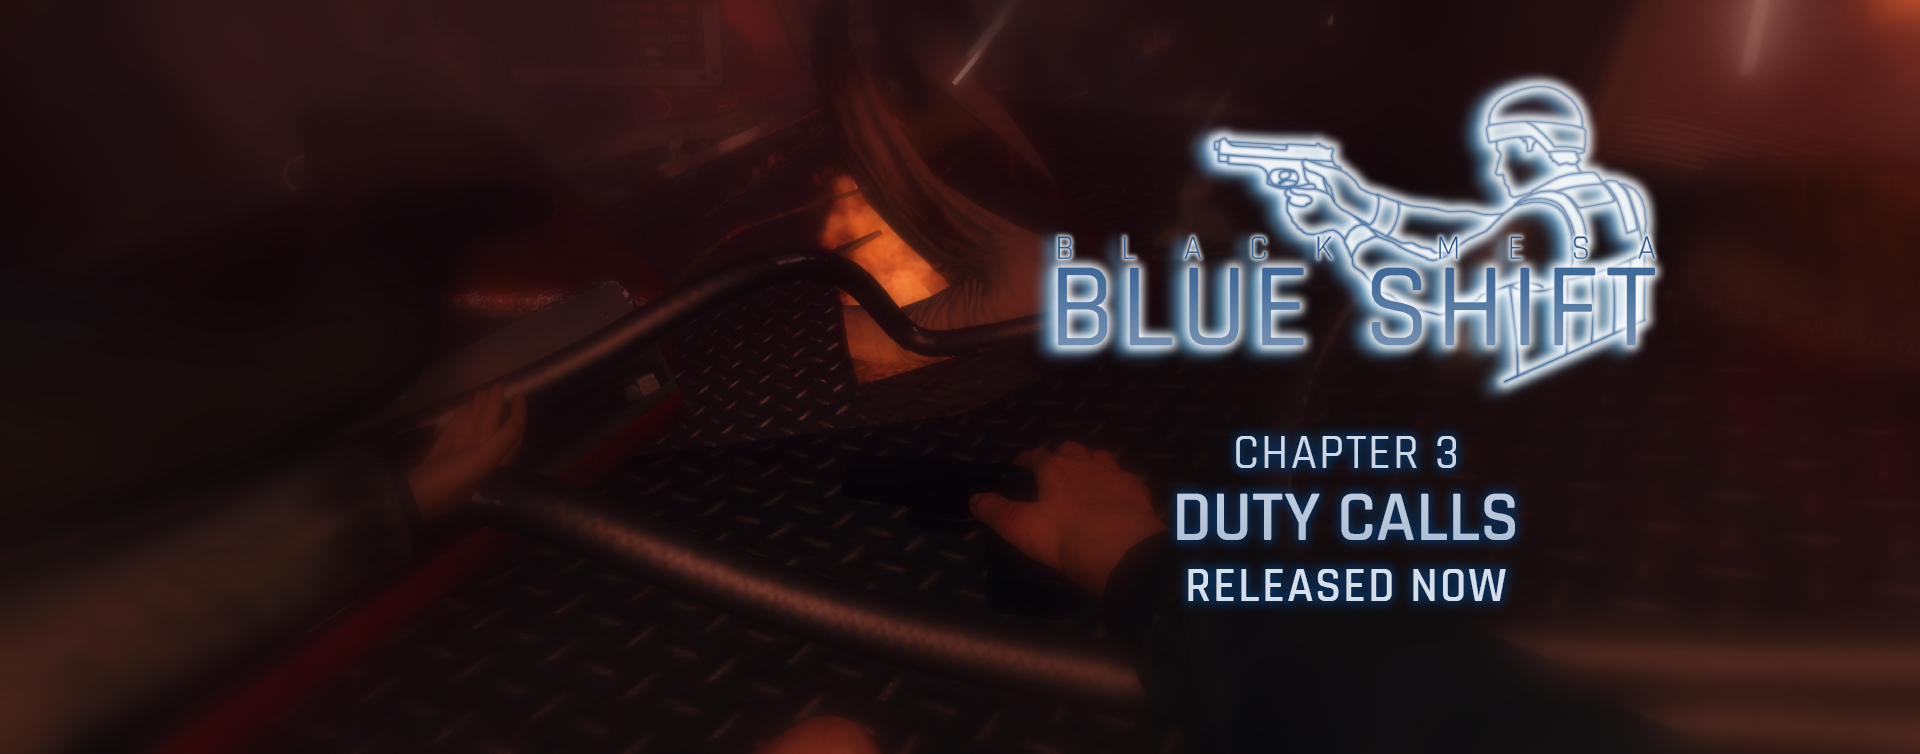 Black Mesa: Blue Shift - Chapter 3: Duty Calls Release